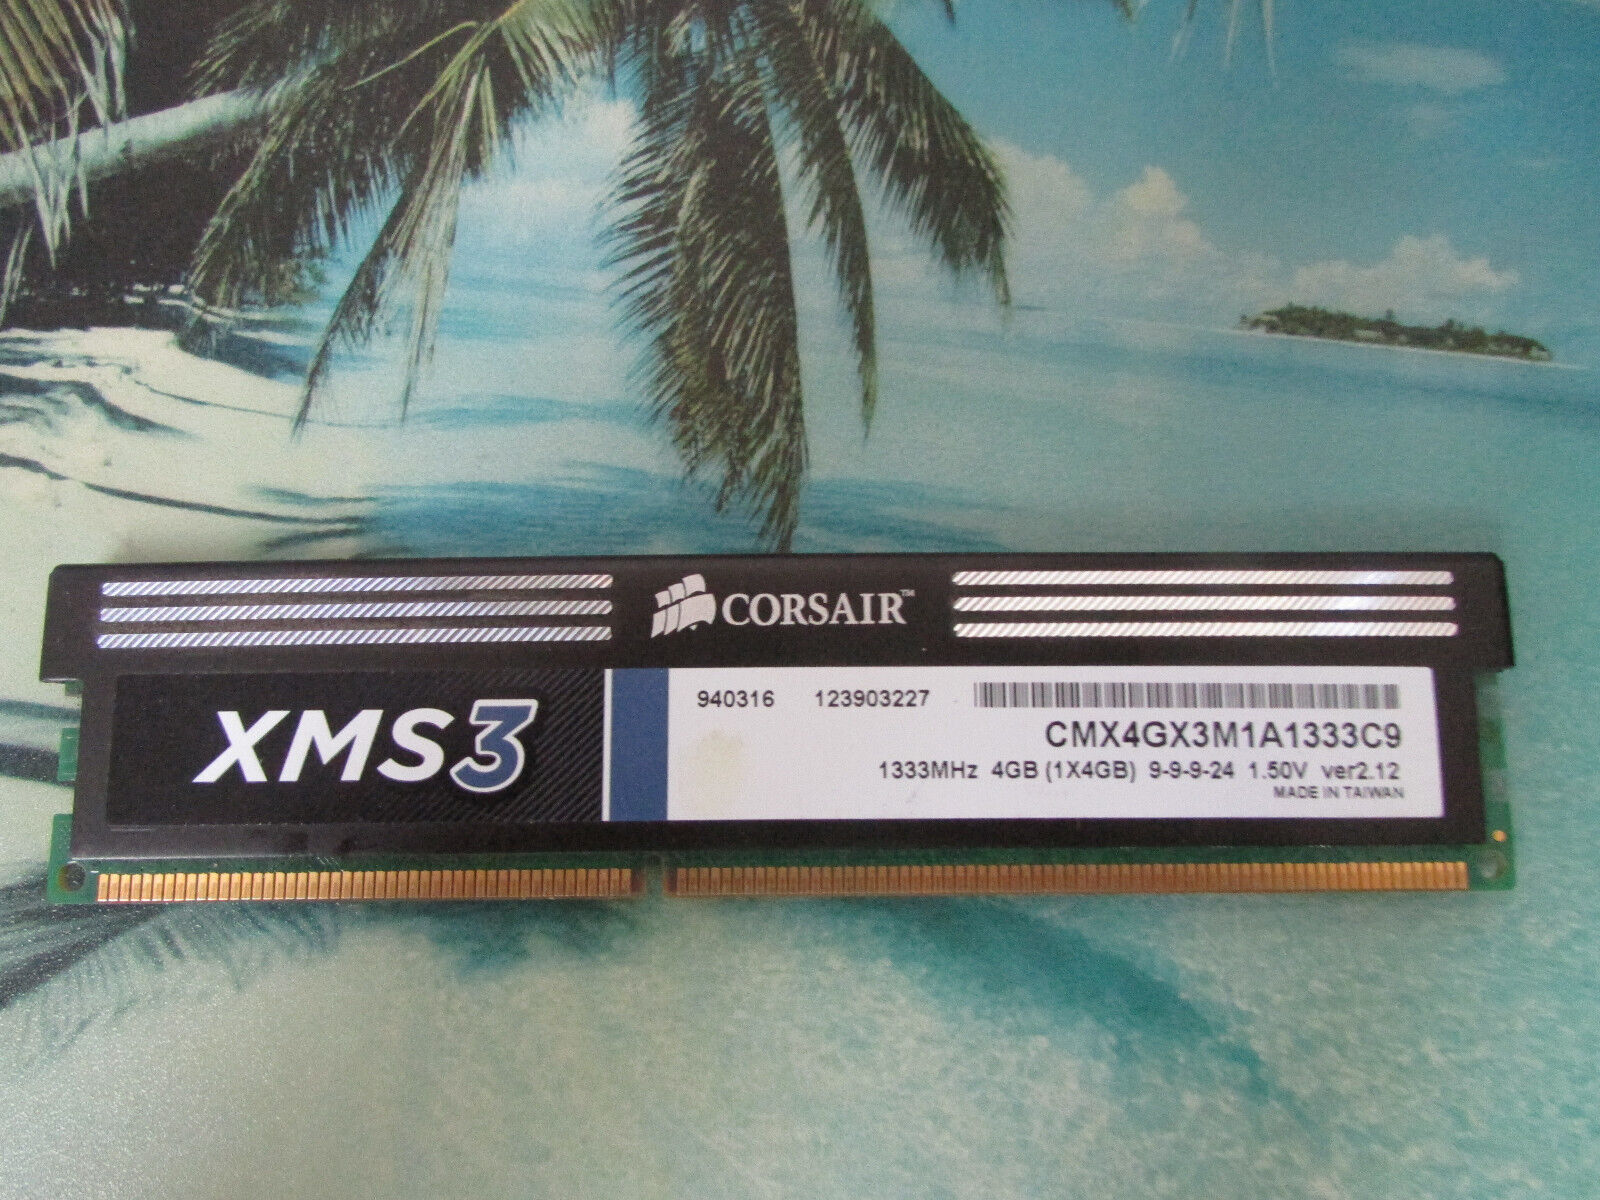 CORSAIR XMS3 DDR3 4GB (1X4GB) CMX4GX3M1A1333C9 MEMORY - (VER 2.12 or 8.16)